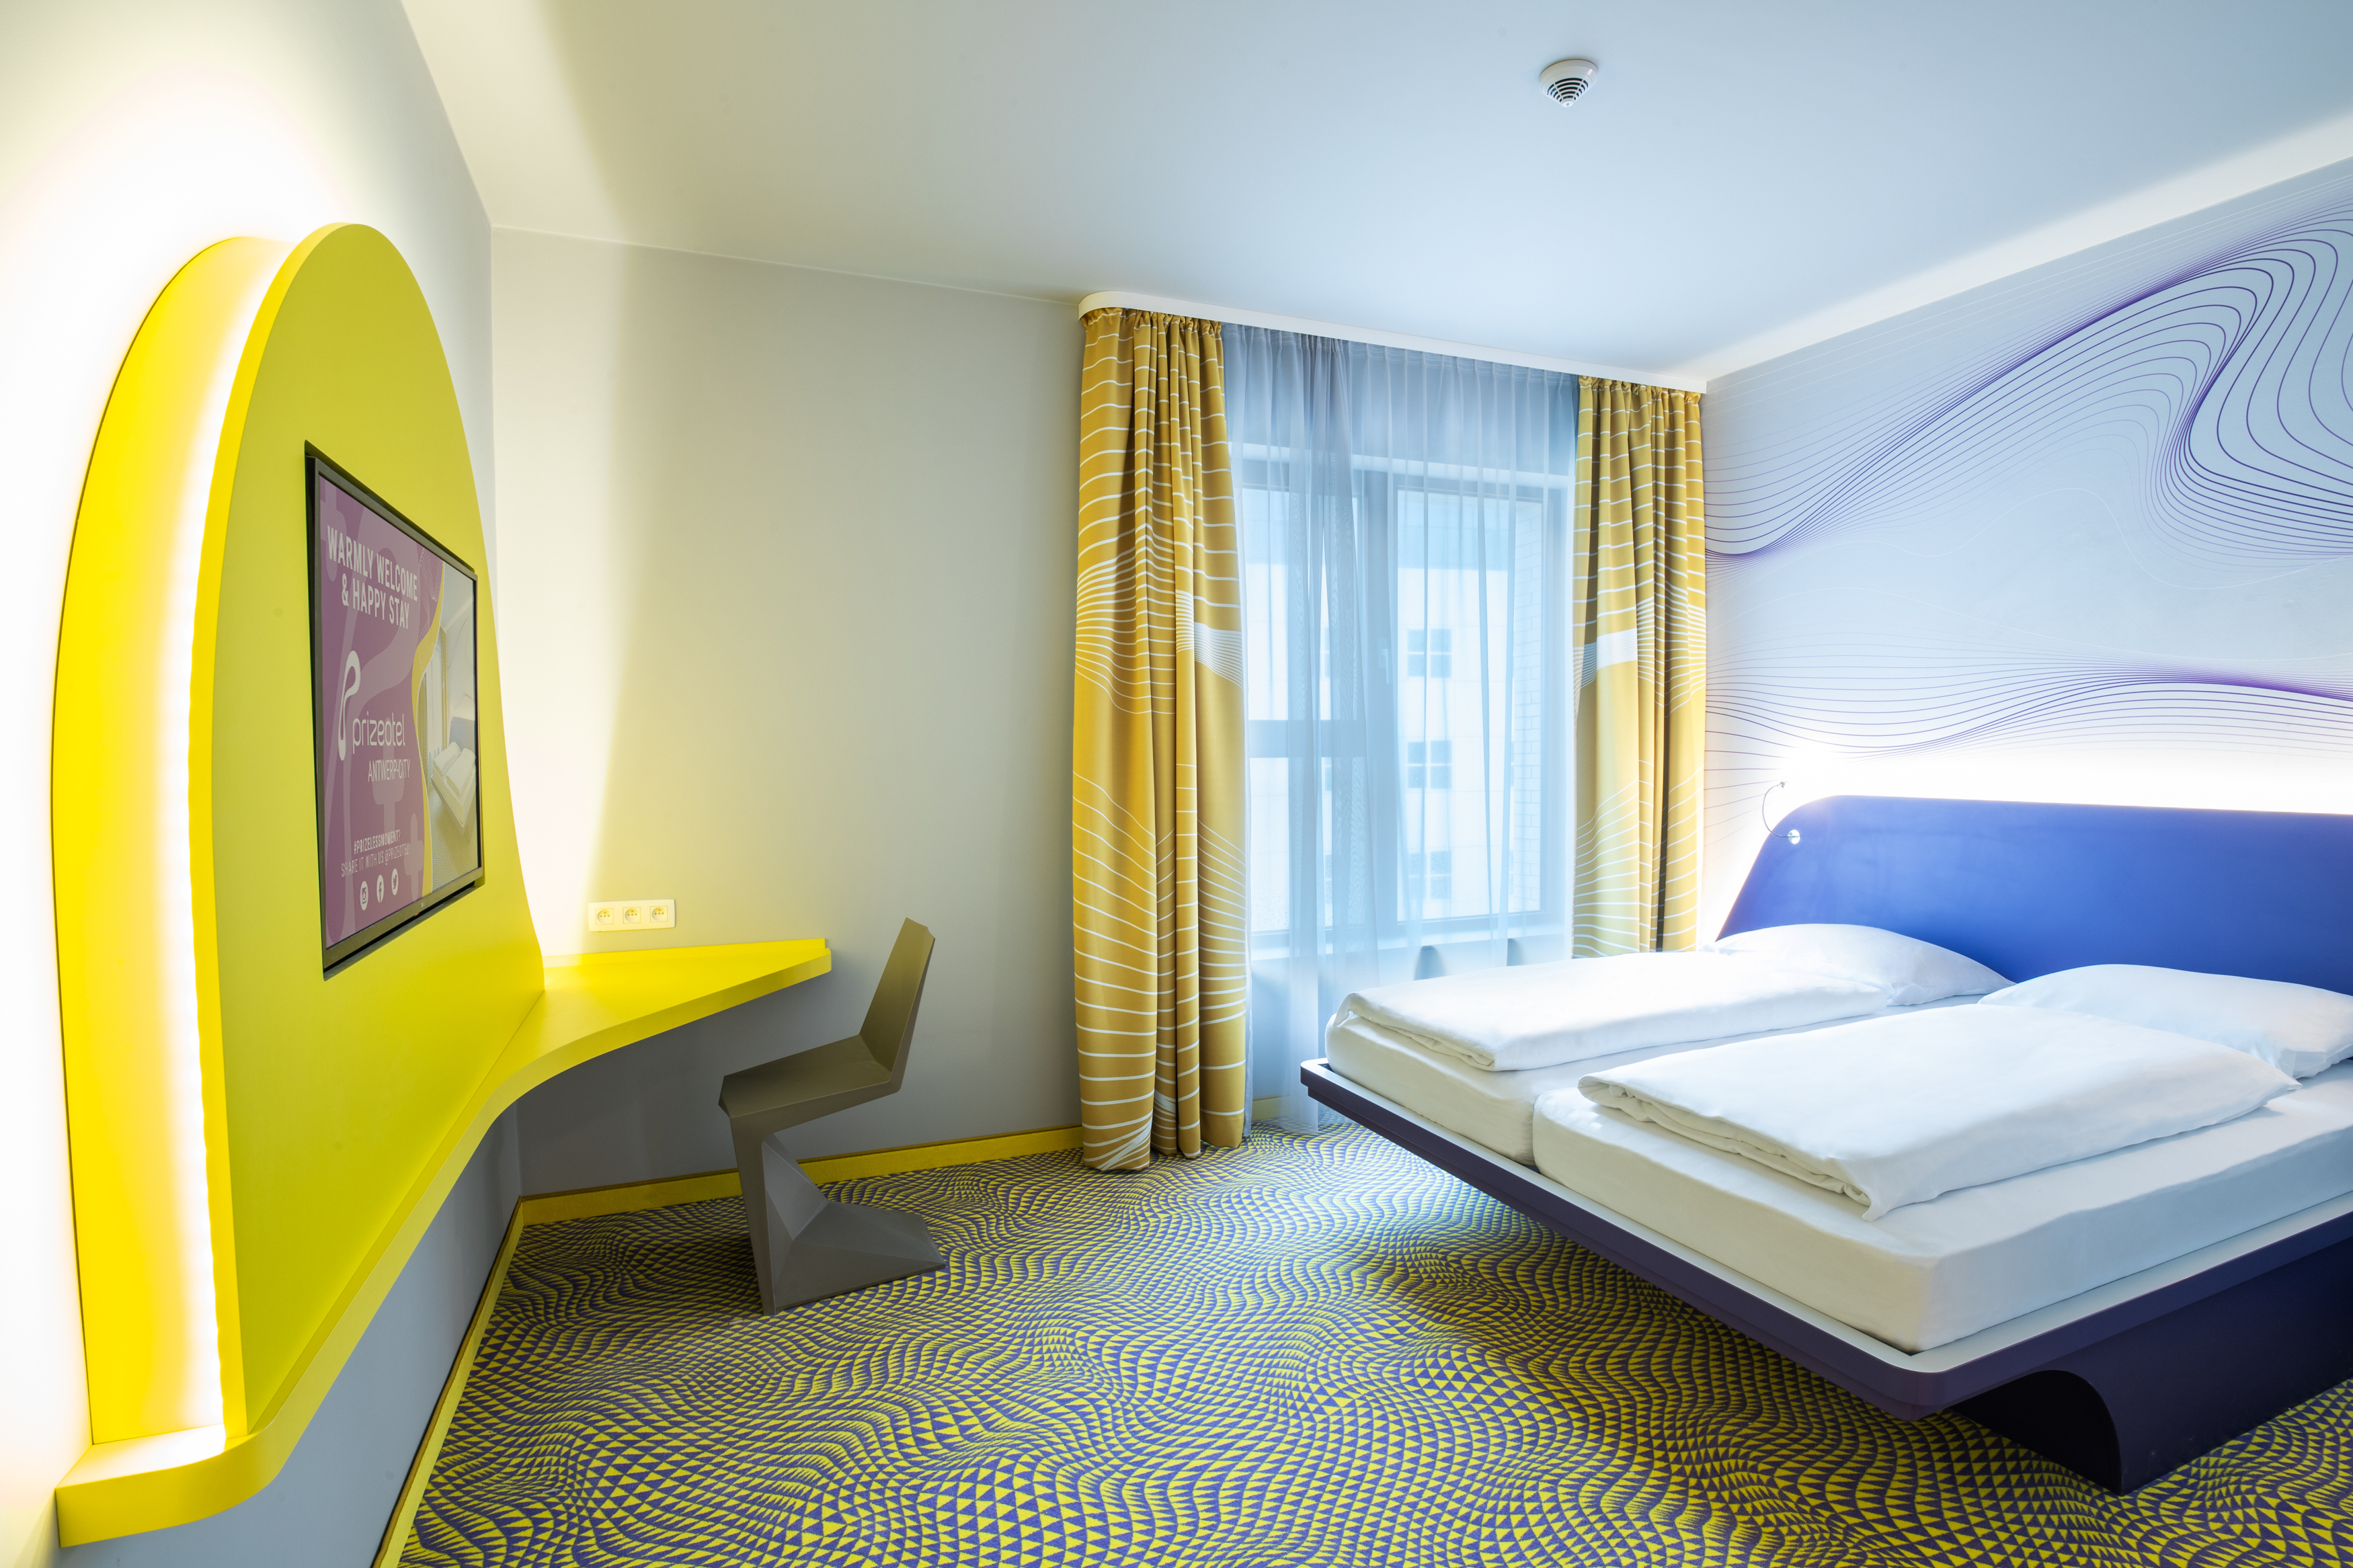 Hotel room of prizeotel Antwerp City in warm colors